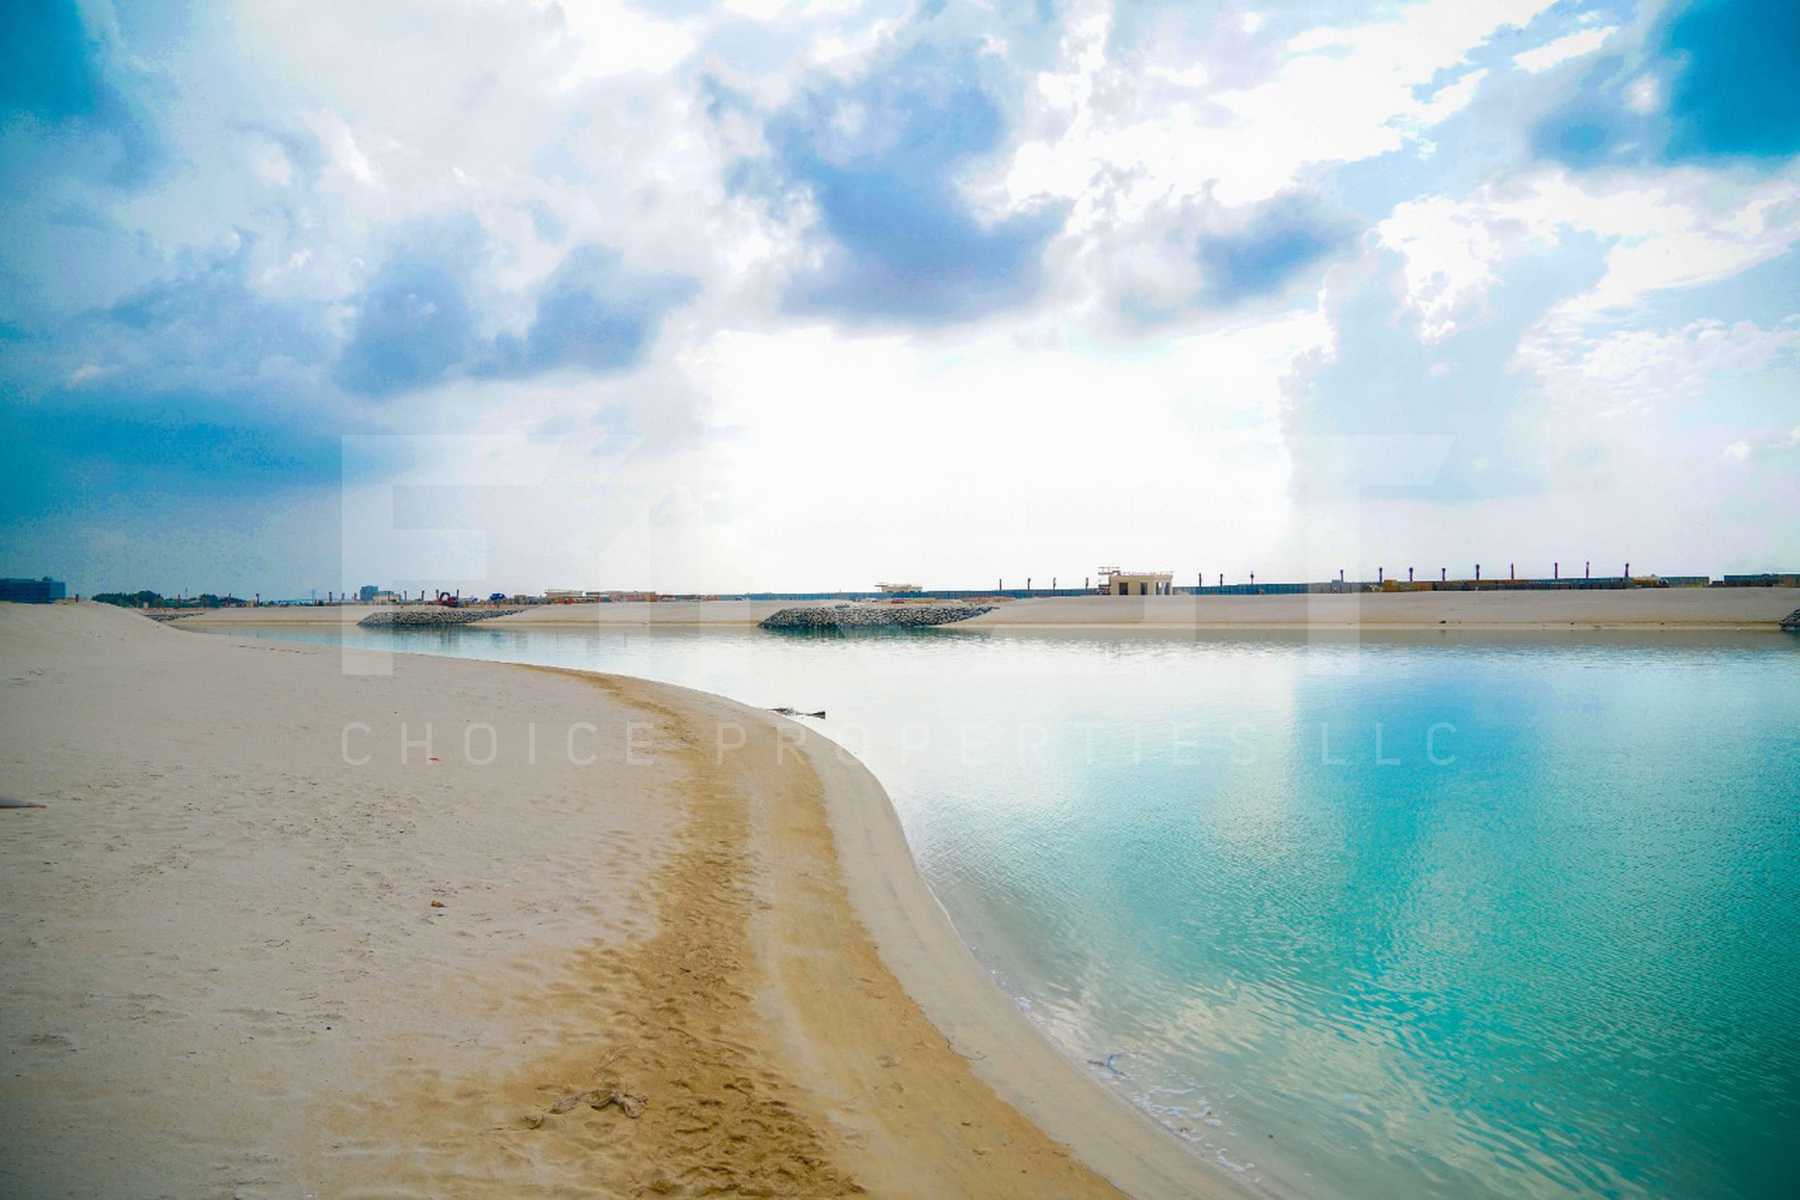 External Photos of NAreel Island Abu Dhabi UAE (3).jpg